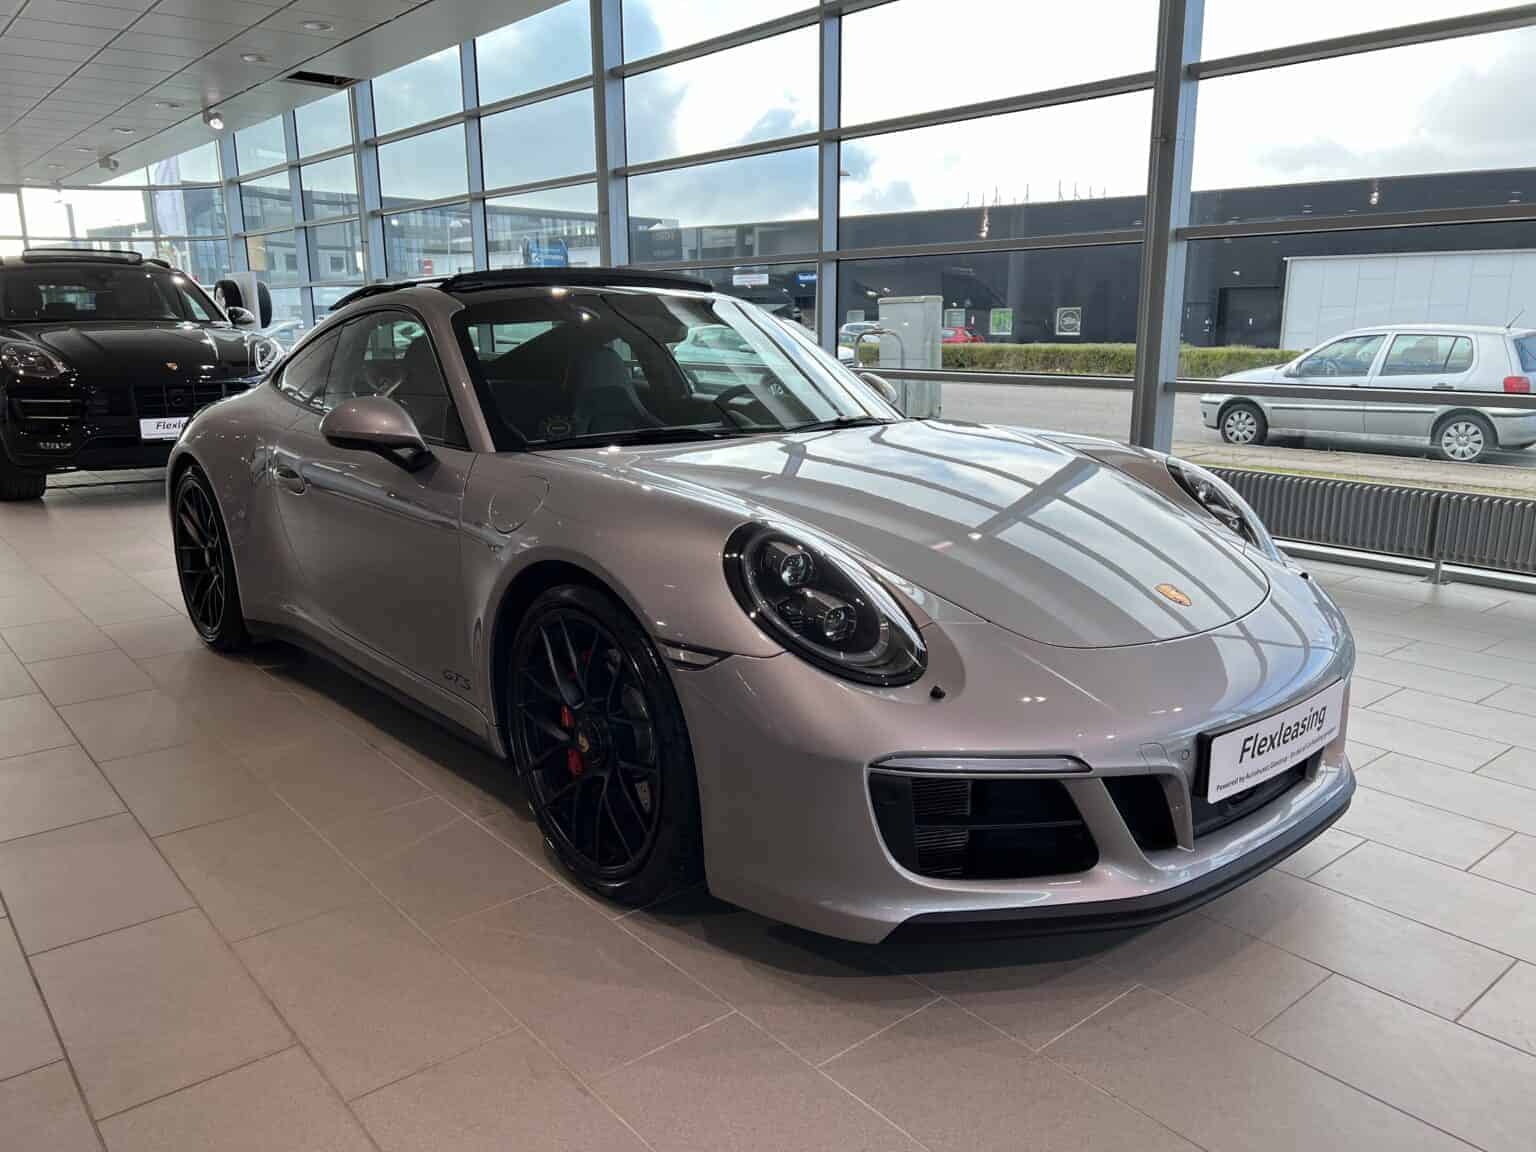 *FUNDET*: Sølv Porsche 911 GTS stjålet i nat